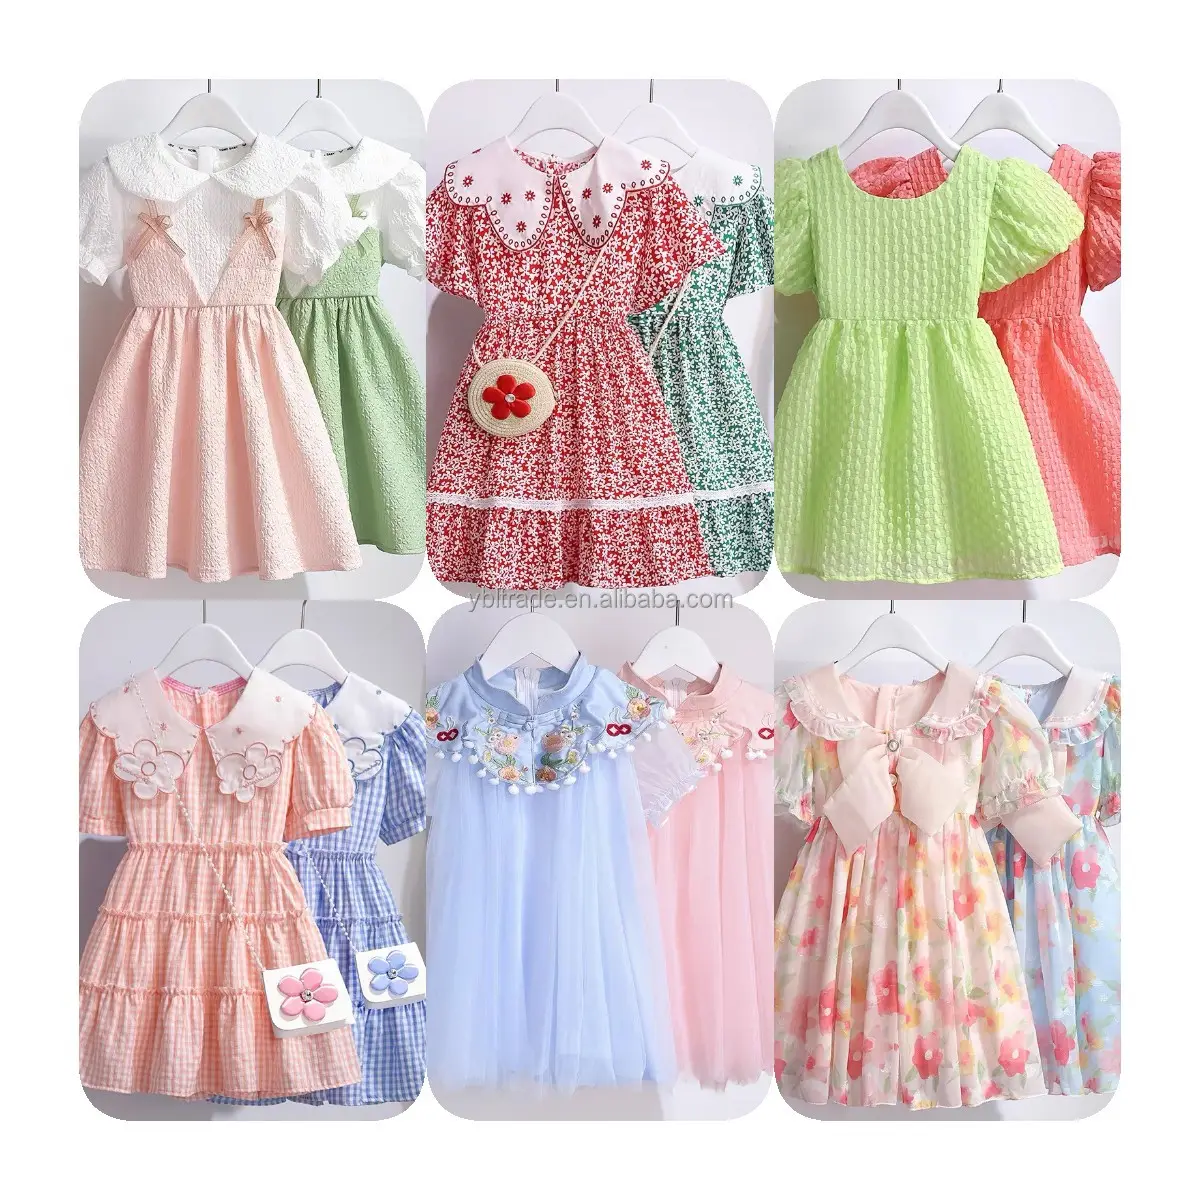 Comfortable Girls Clothes Dresses Hot Selling Kids Dress Children's Dress Prints Summer Kids Clothing